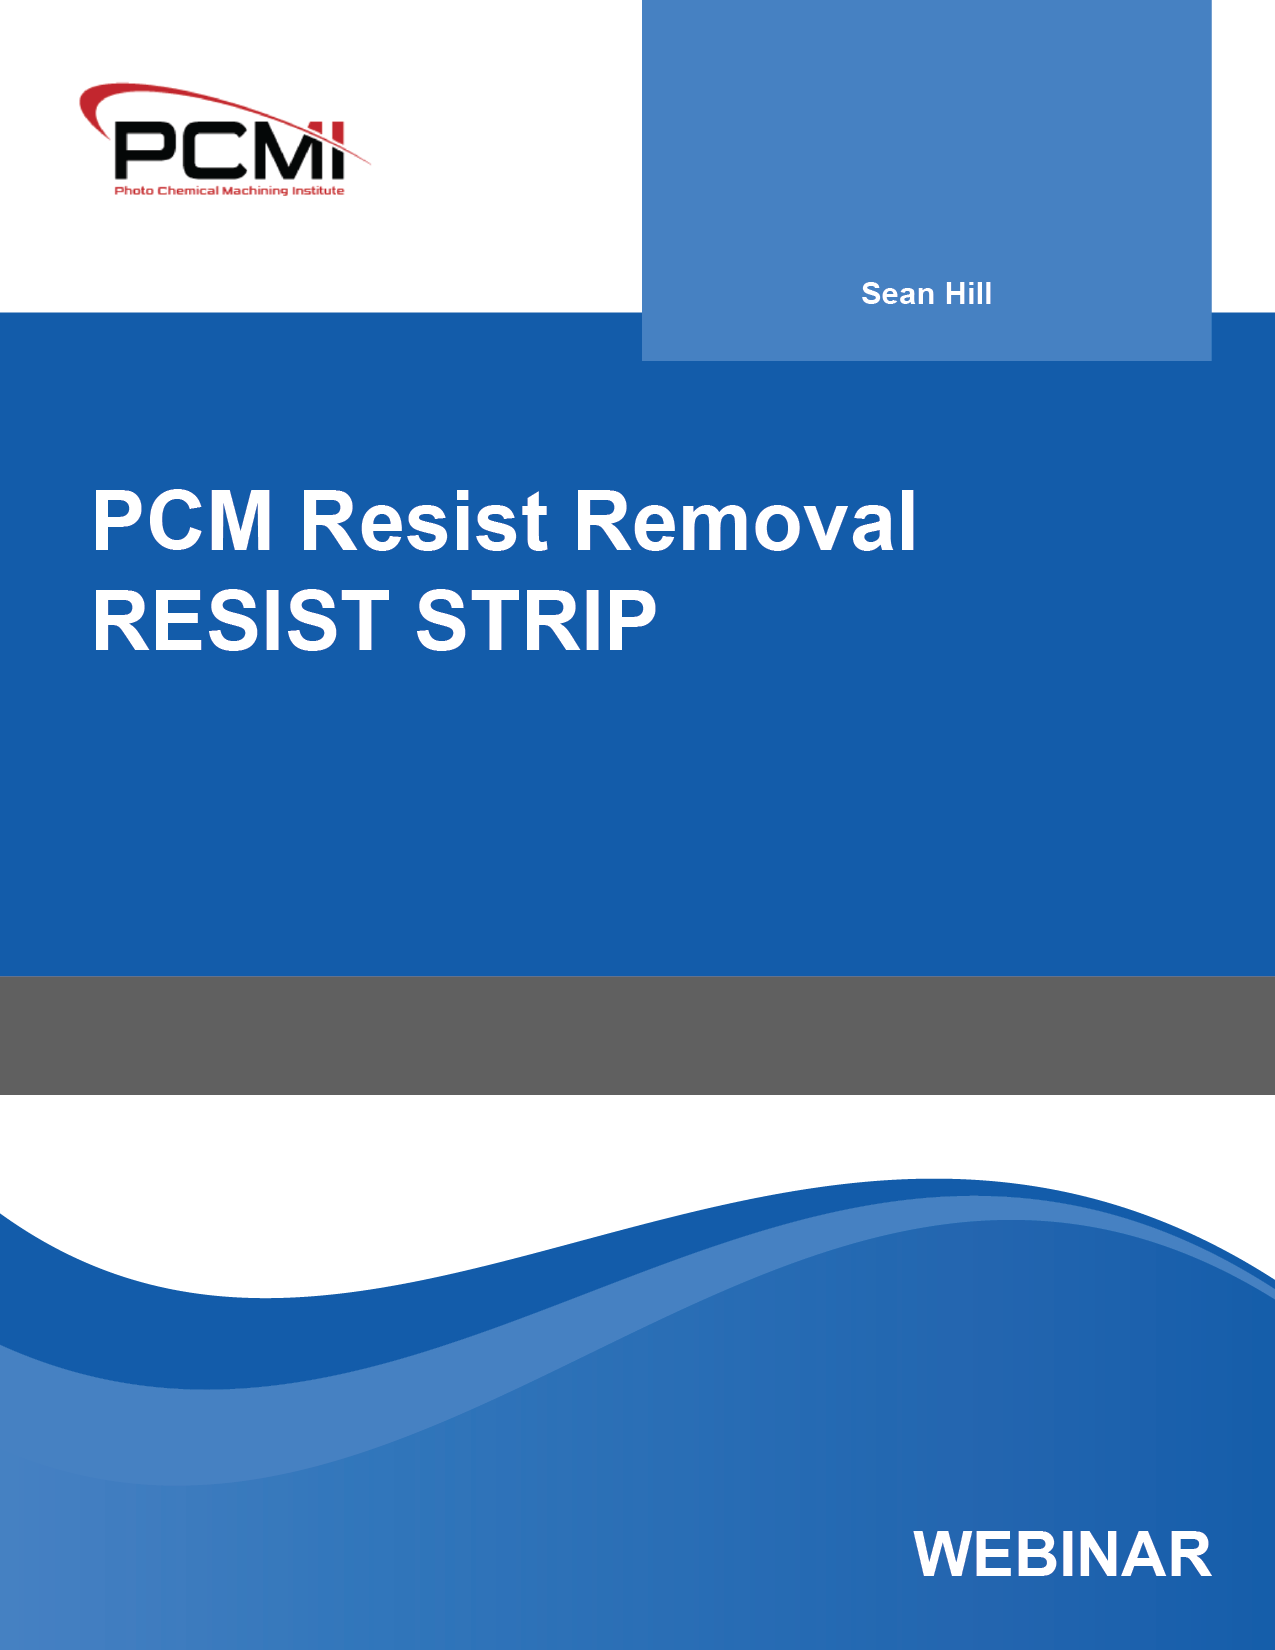 PCM Resist Removal: RESIST STRIP